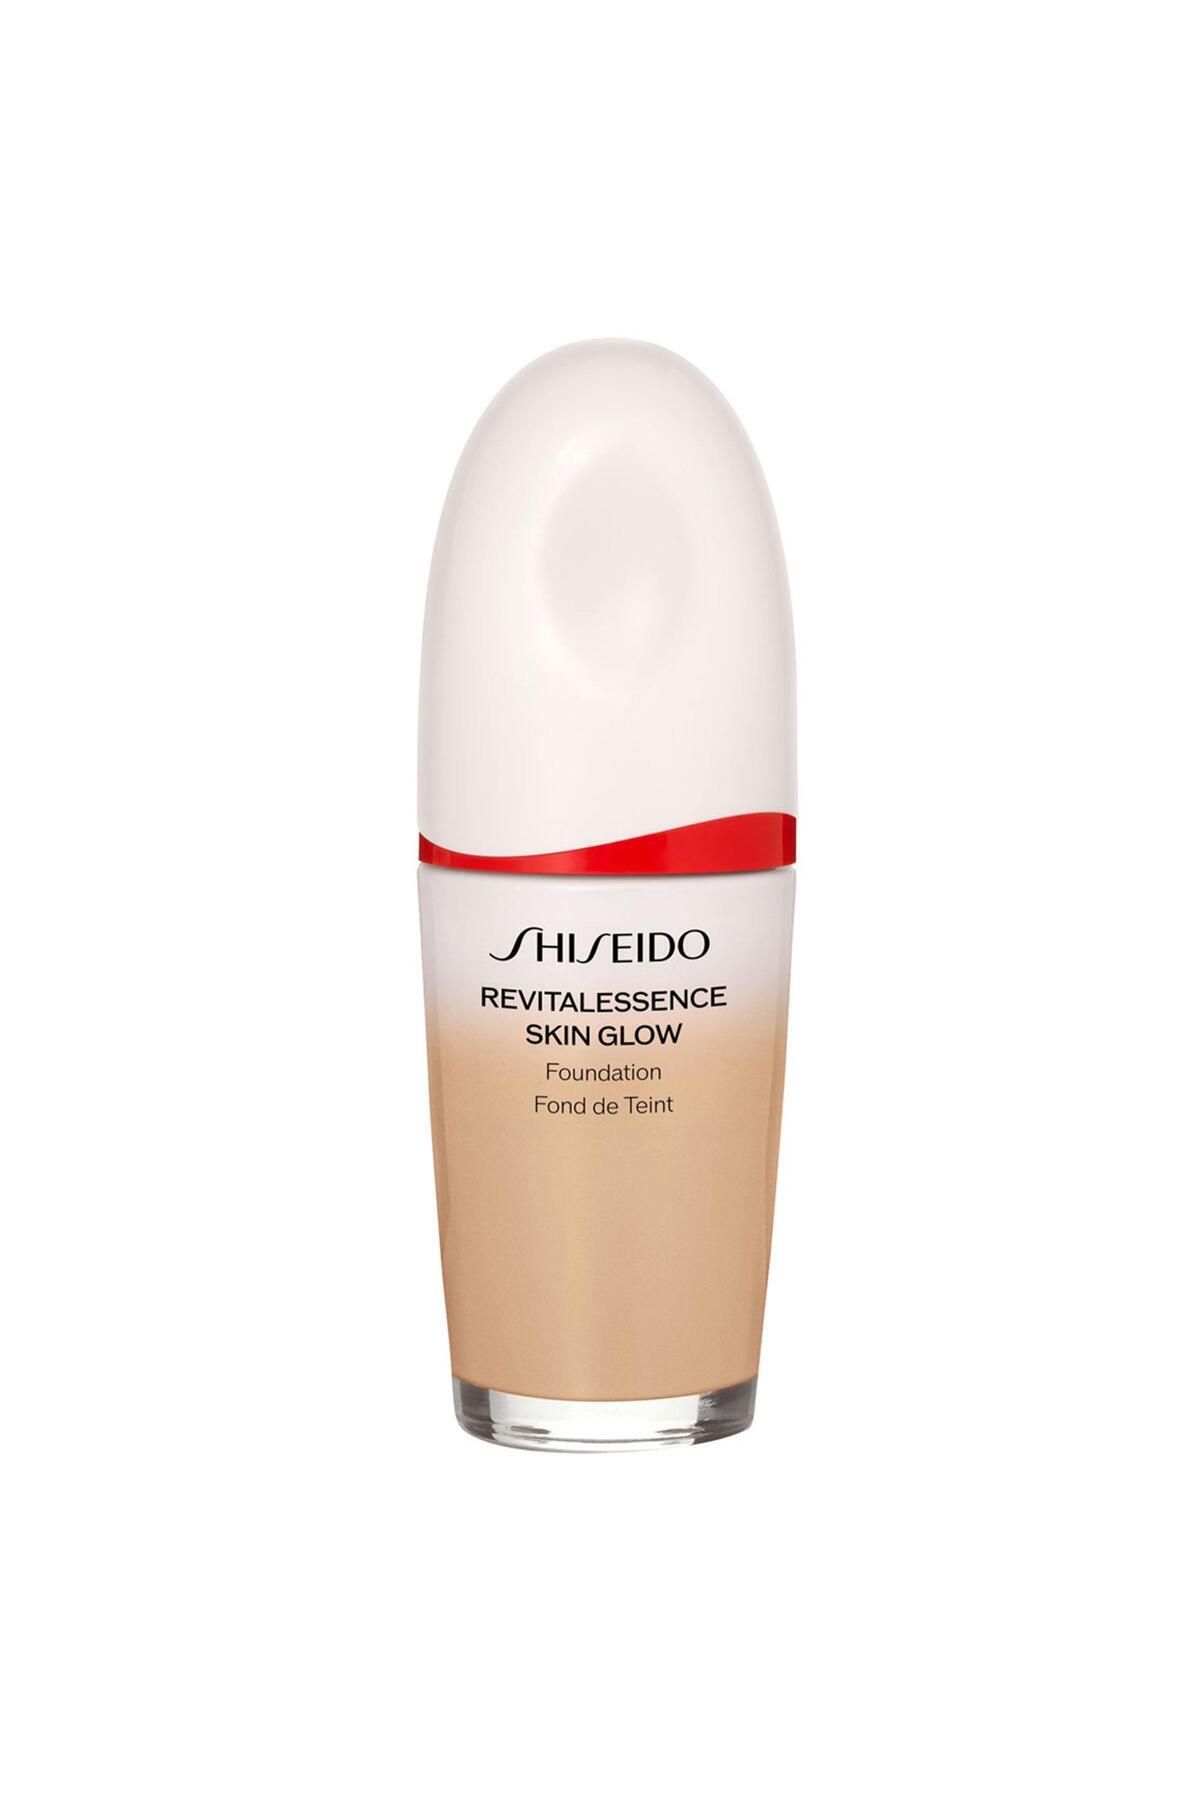 Shiseido Revıtalessence Skın Glow Foundatıon Spf 30 Pa 260